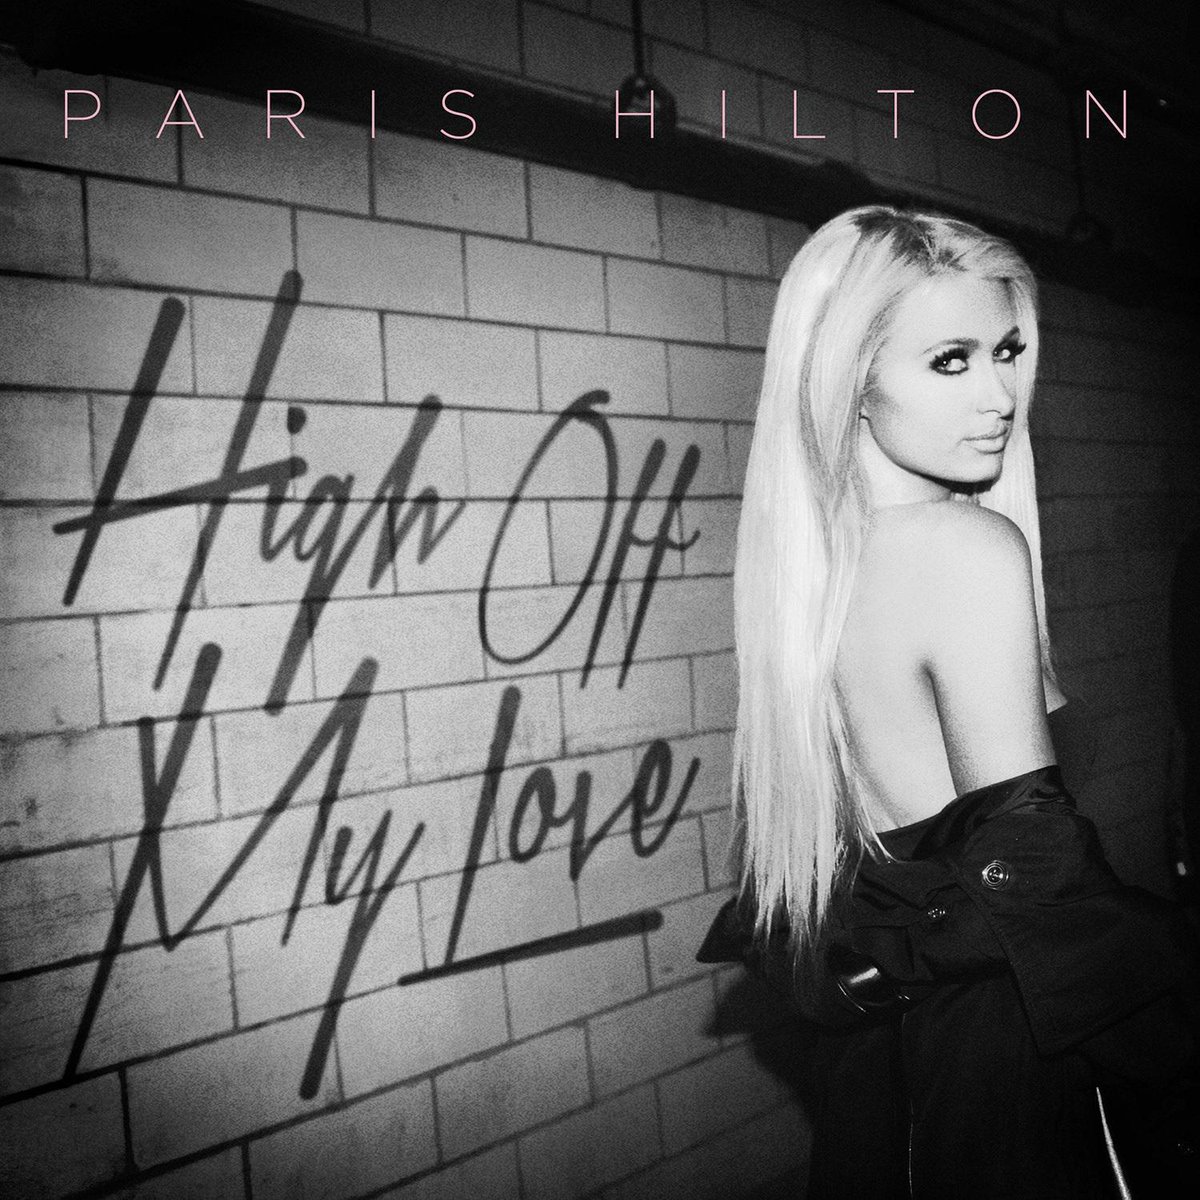 RT @mindskap: Pretty soon I will share a preview of my upcoming remix! @ParisHilton #highoffmylove #mindskap http://t.co/Os1pVuJ6qw